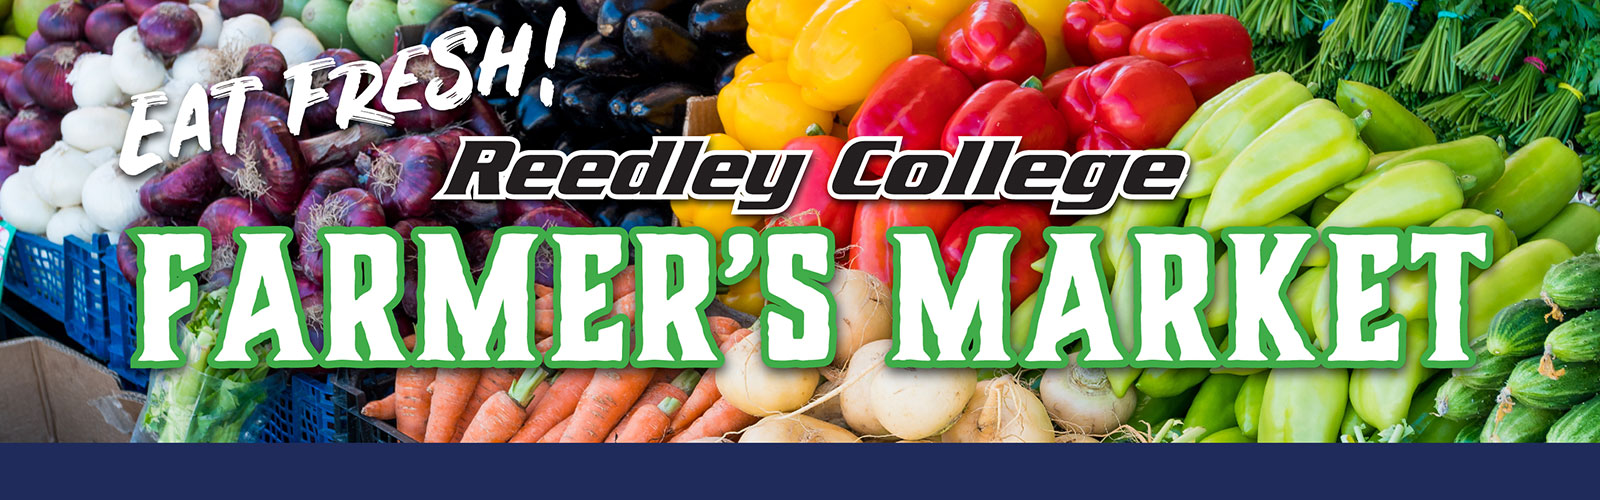 RC farmers market - Eat Fresh!